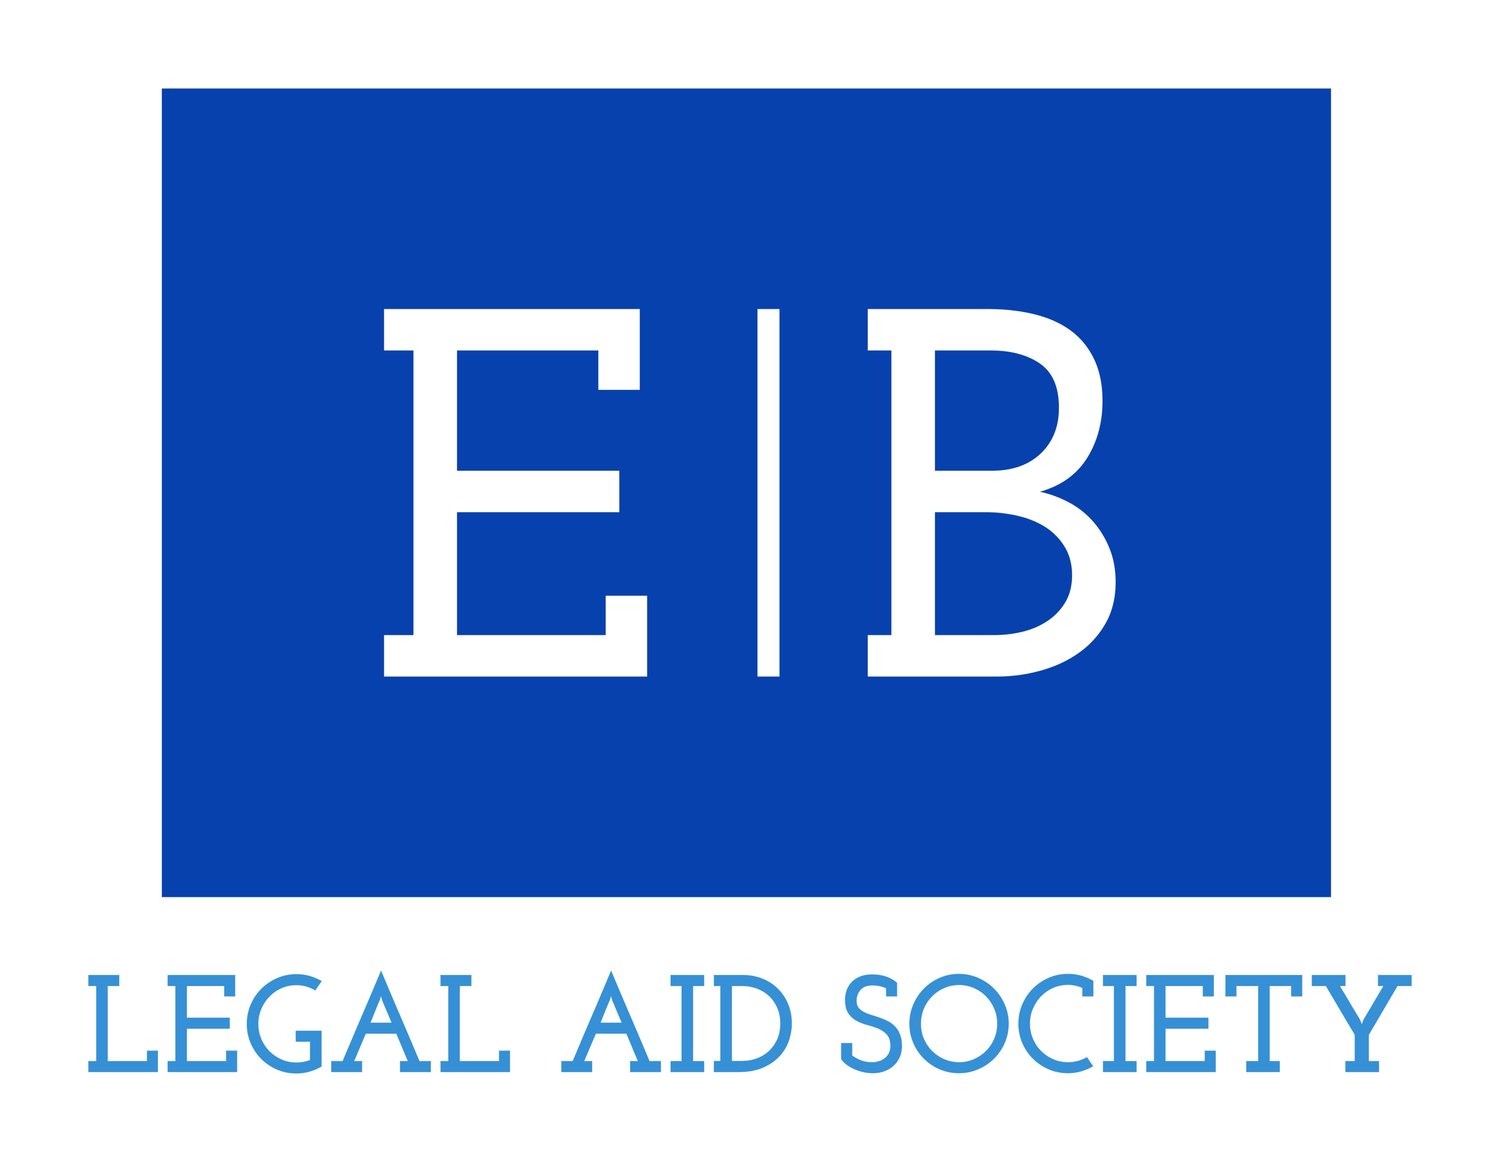 EB LEGAL AID SOCIETY 